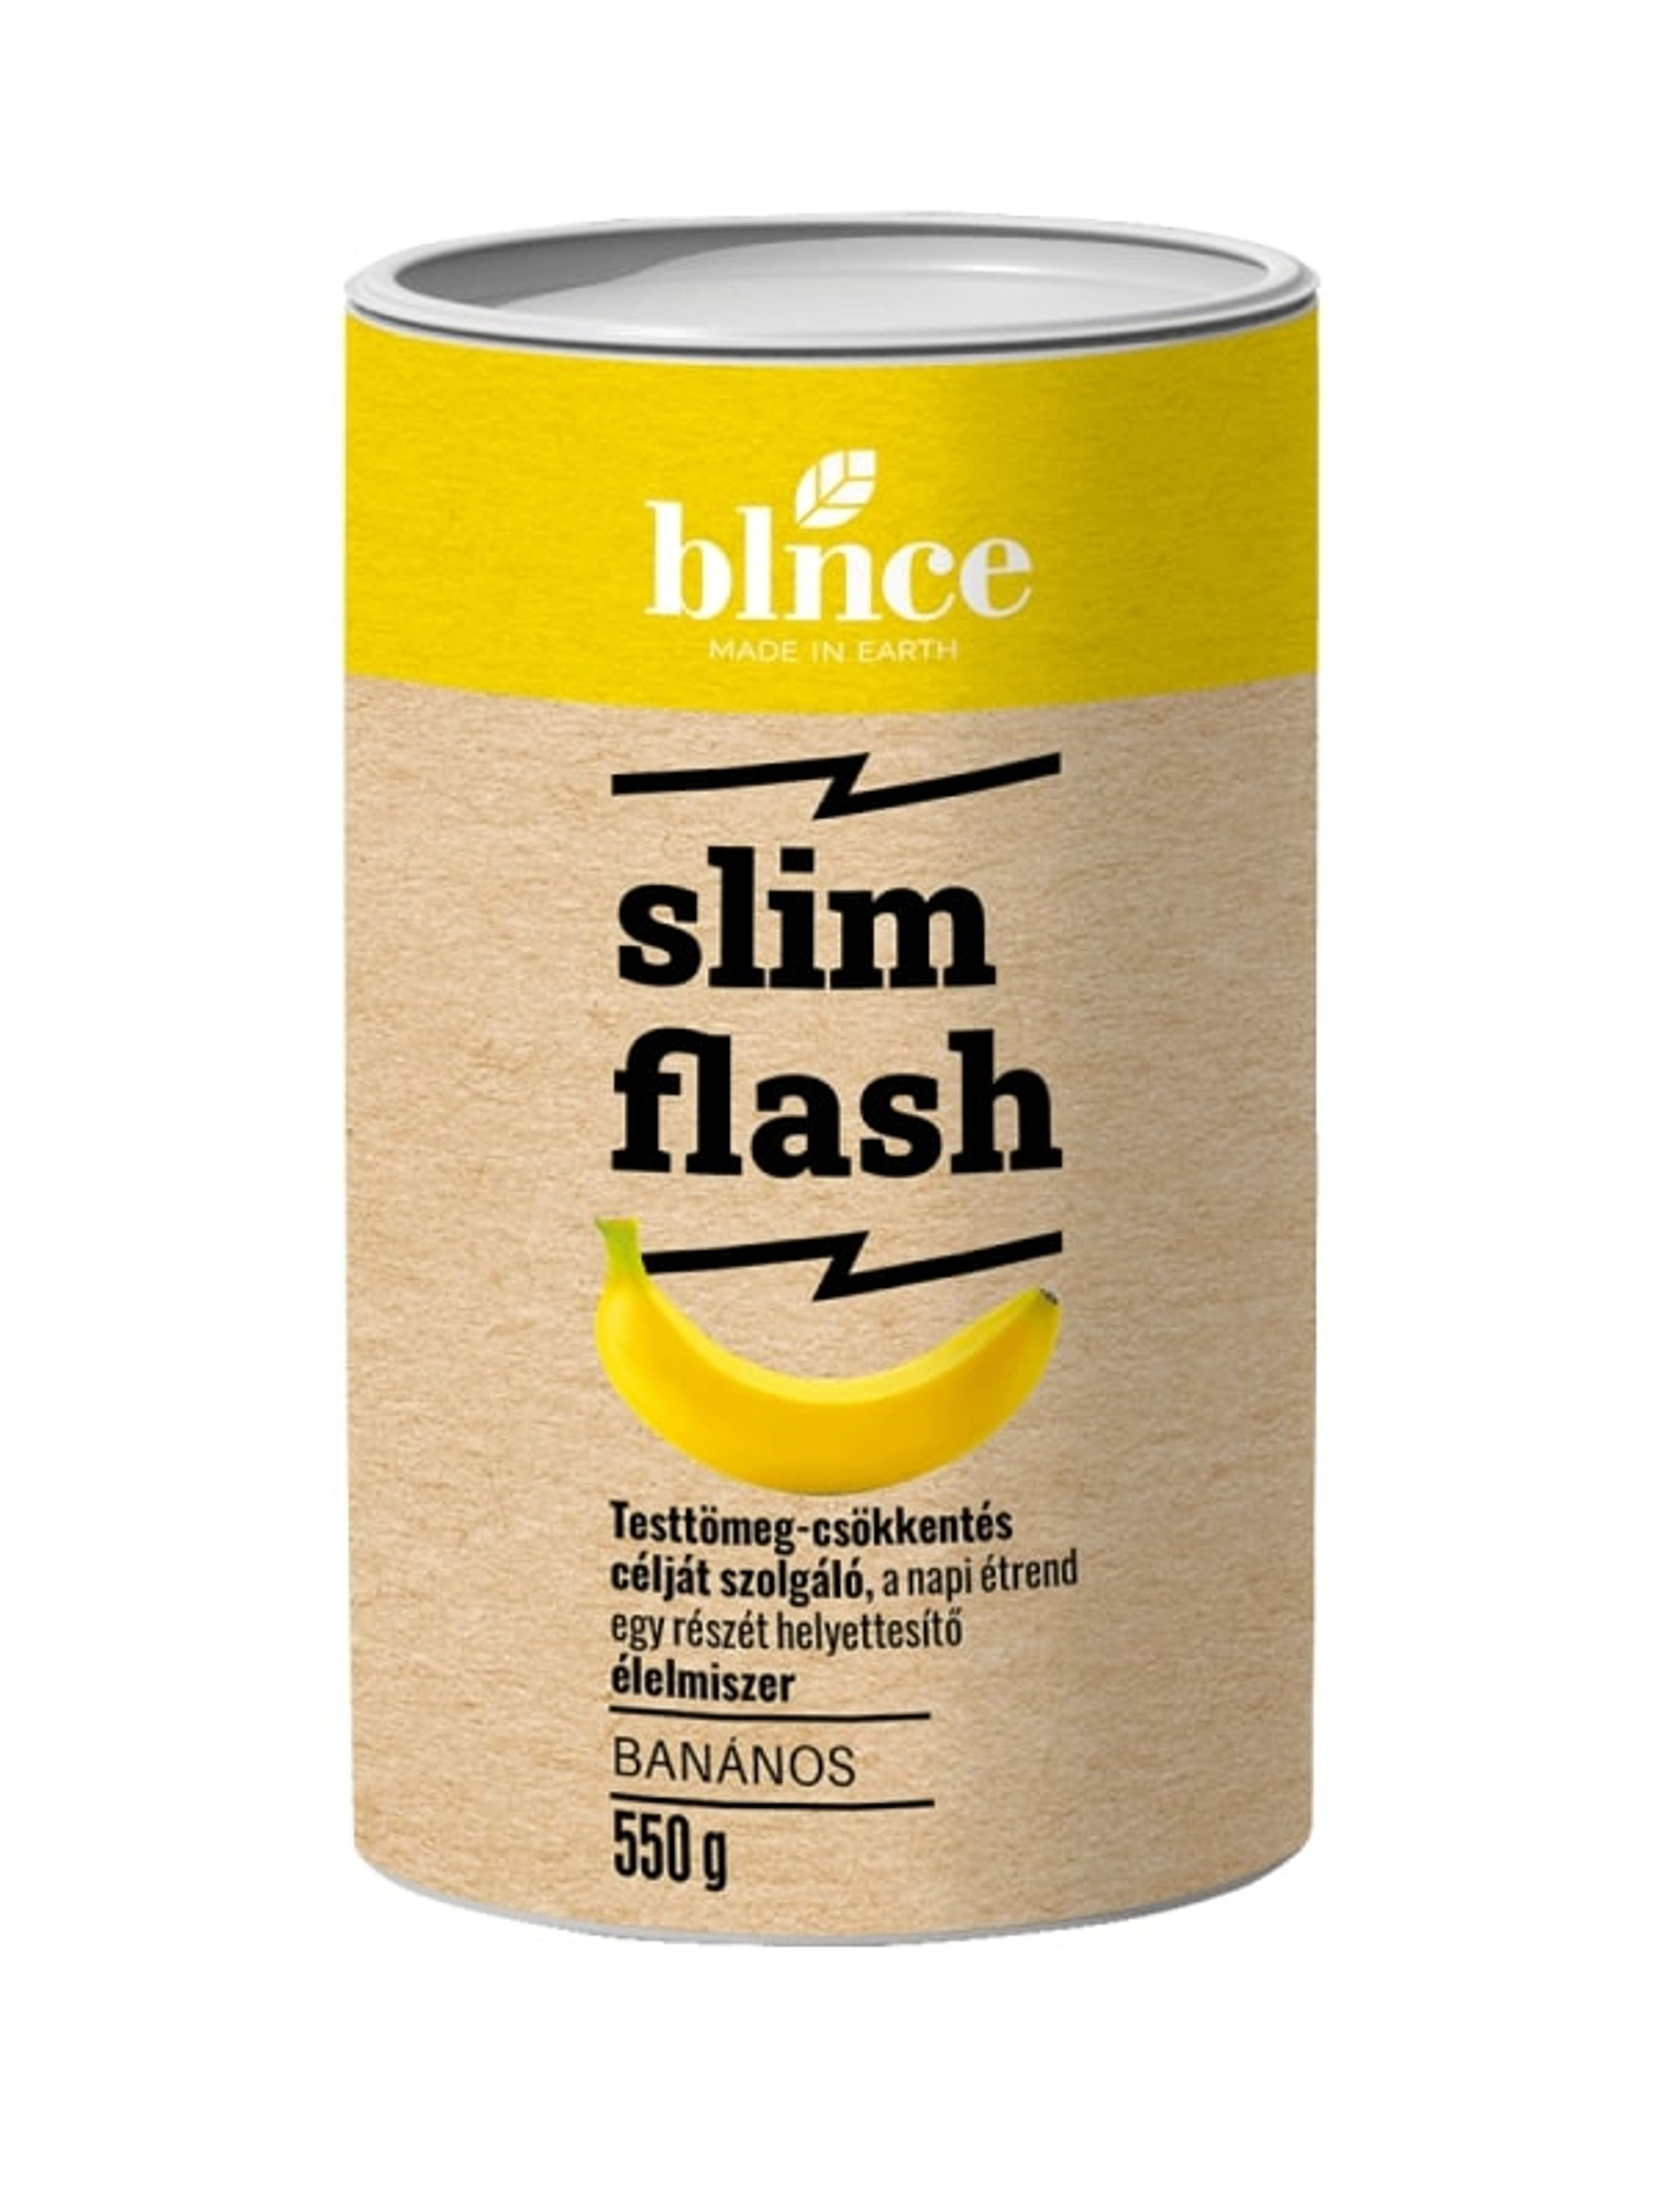 Blnce Active Slim Flash fogyókúrás italpor, babános - 550 g